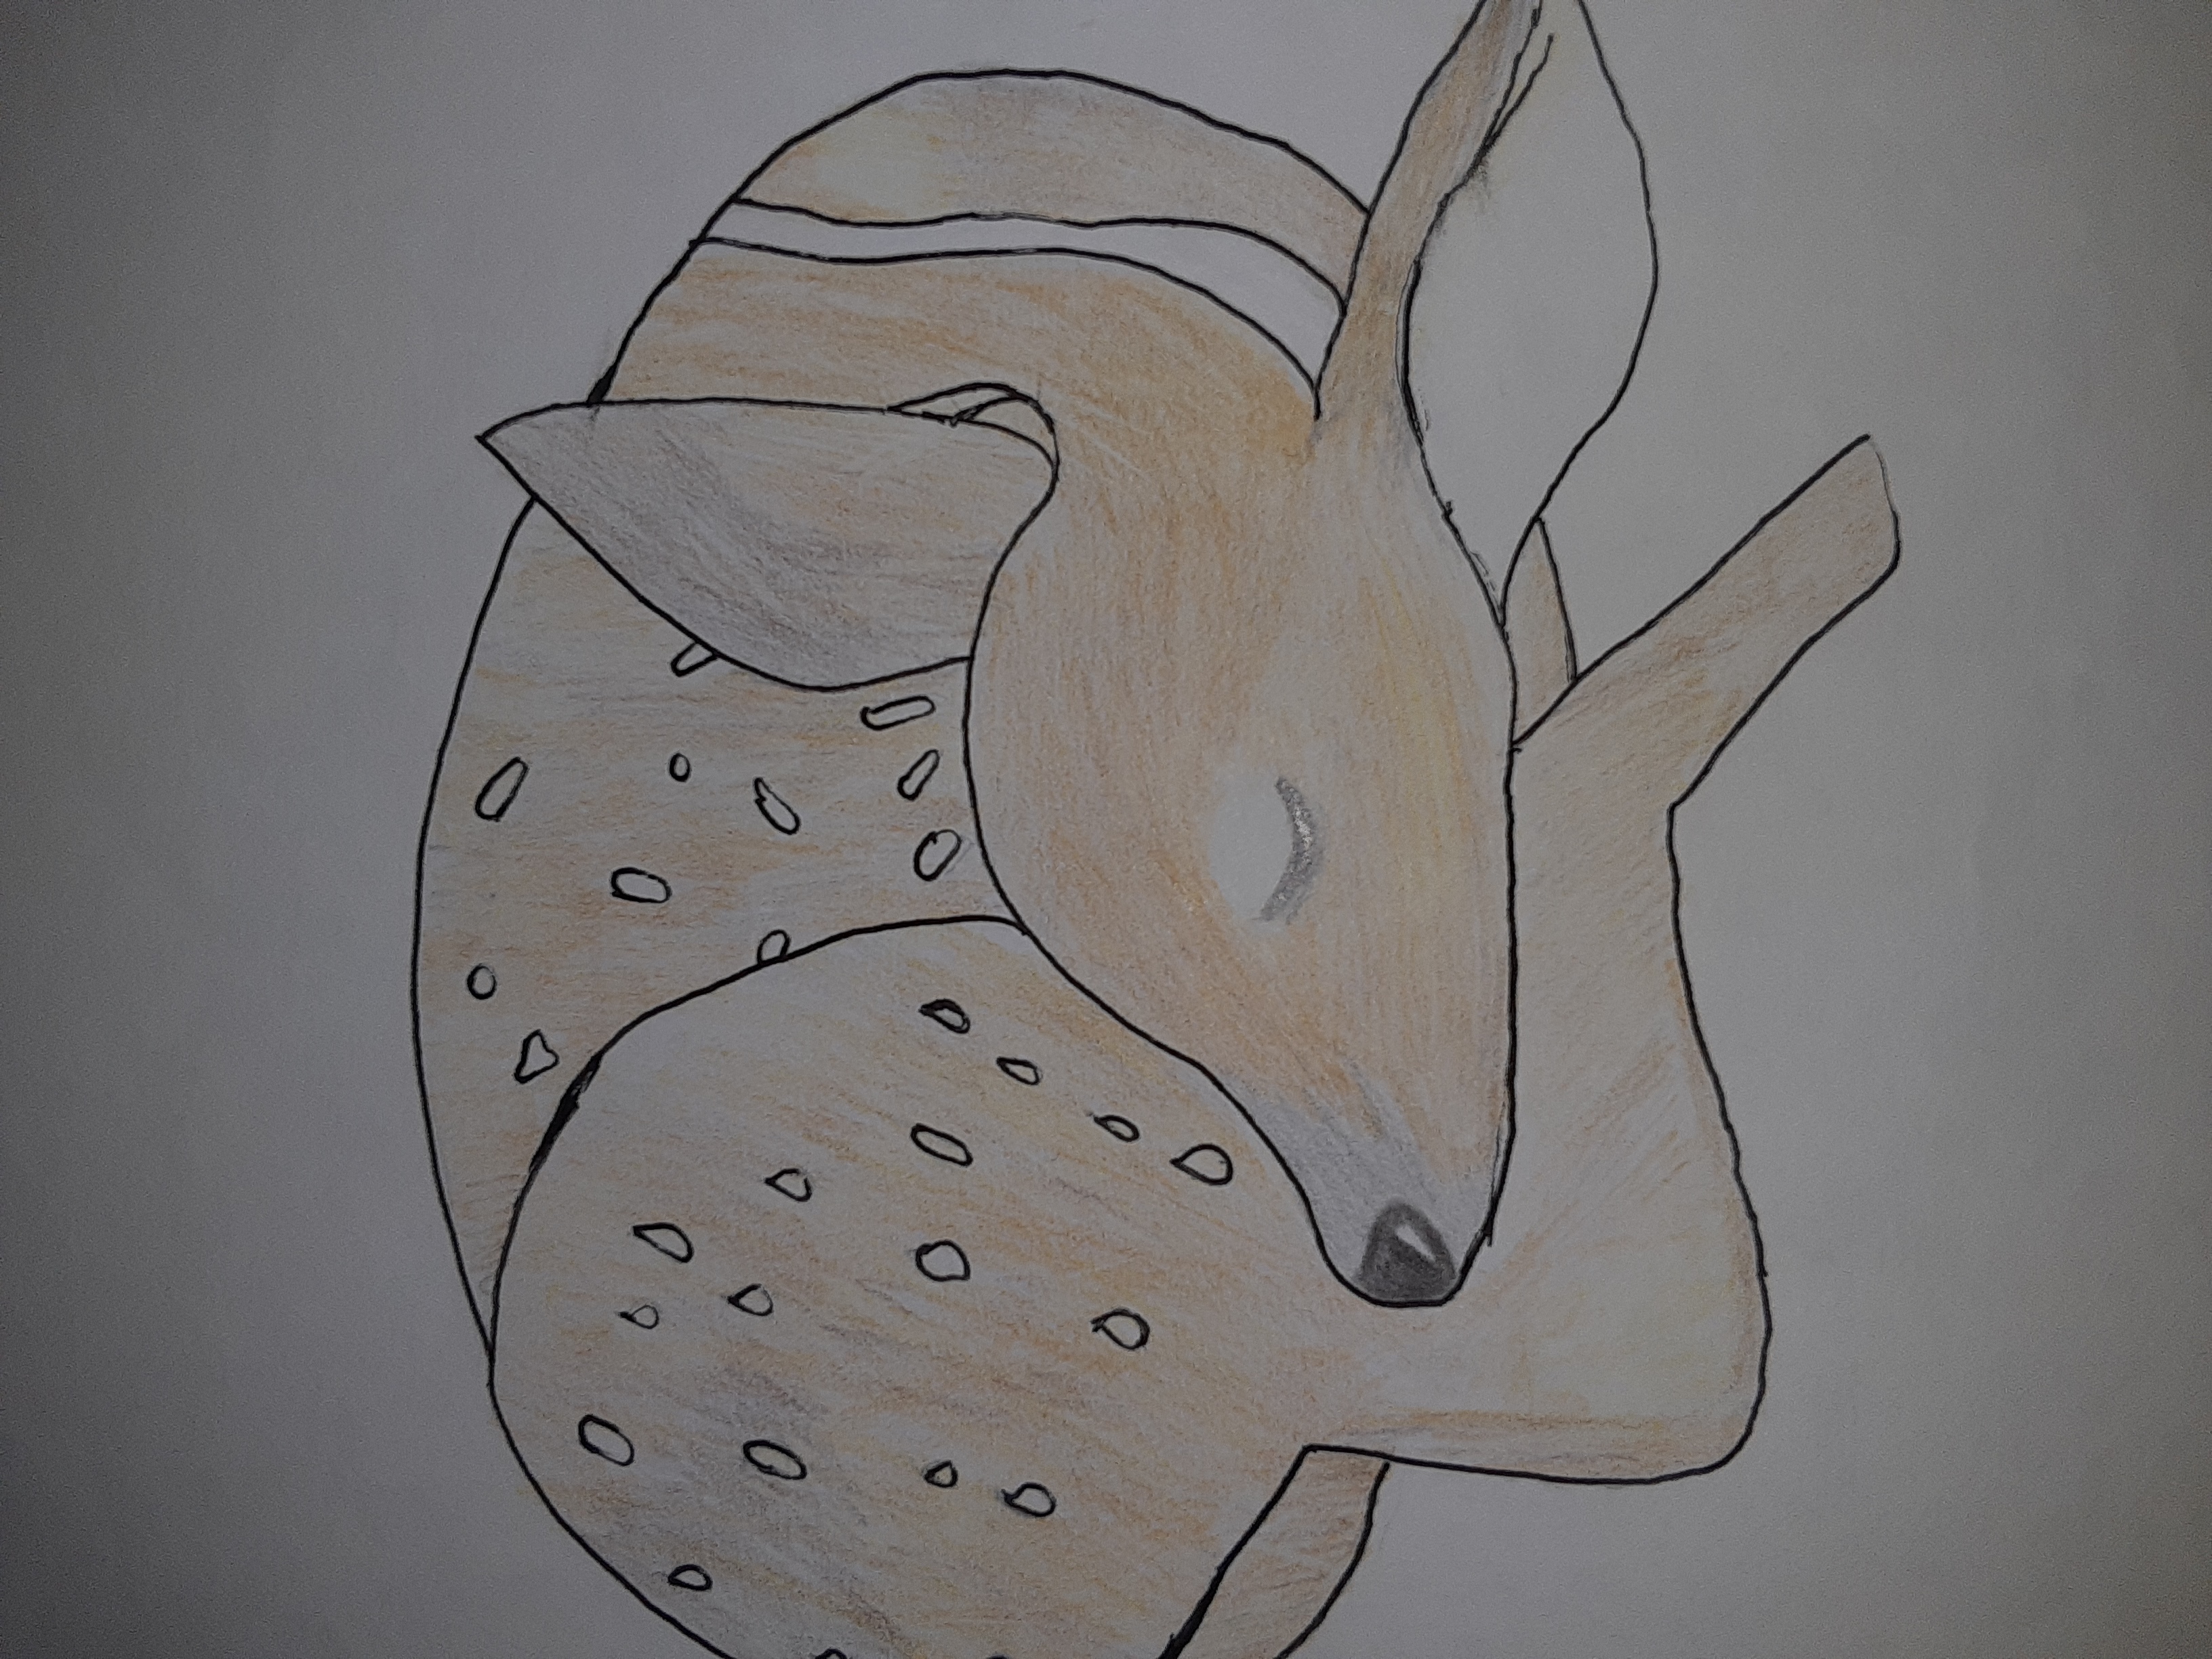 This is a pencil sketch of a sleeping baby deer.